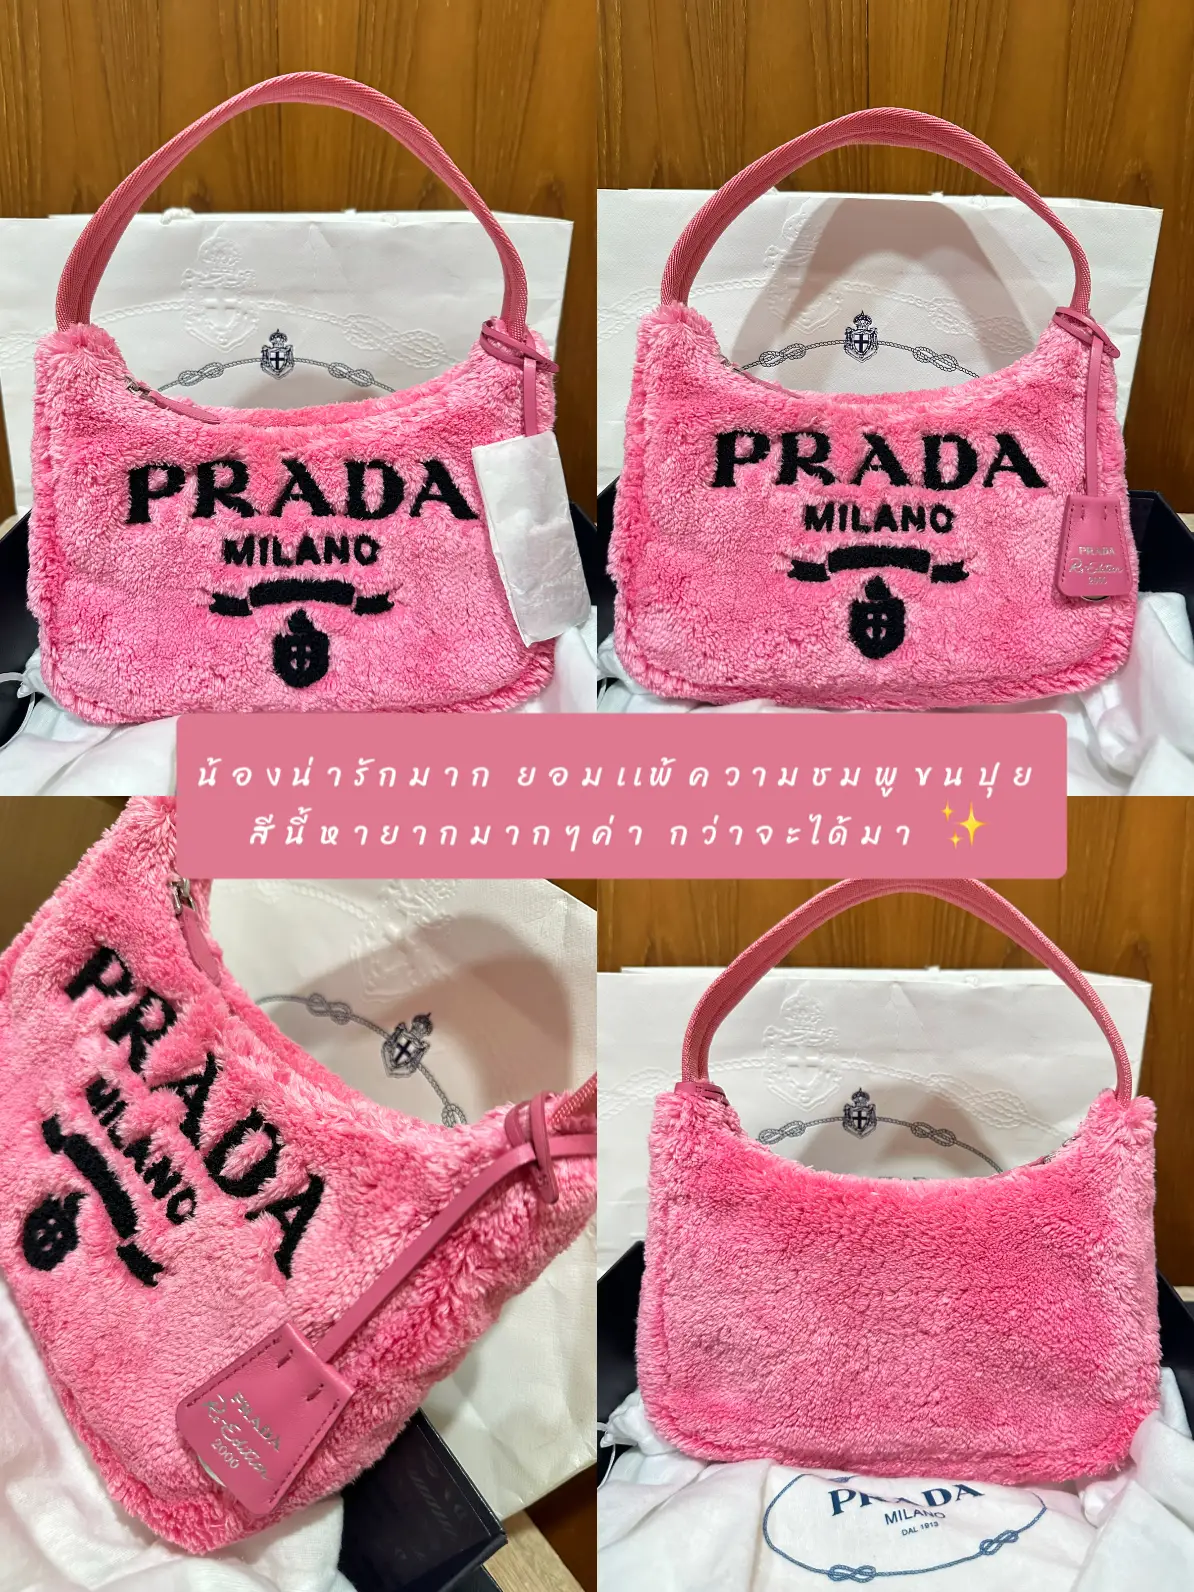 Prada Re-Edition 2000 Terry Mini Bag Unboxing 